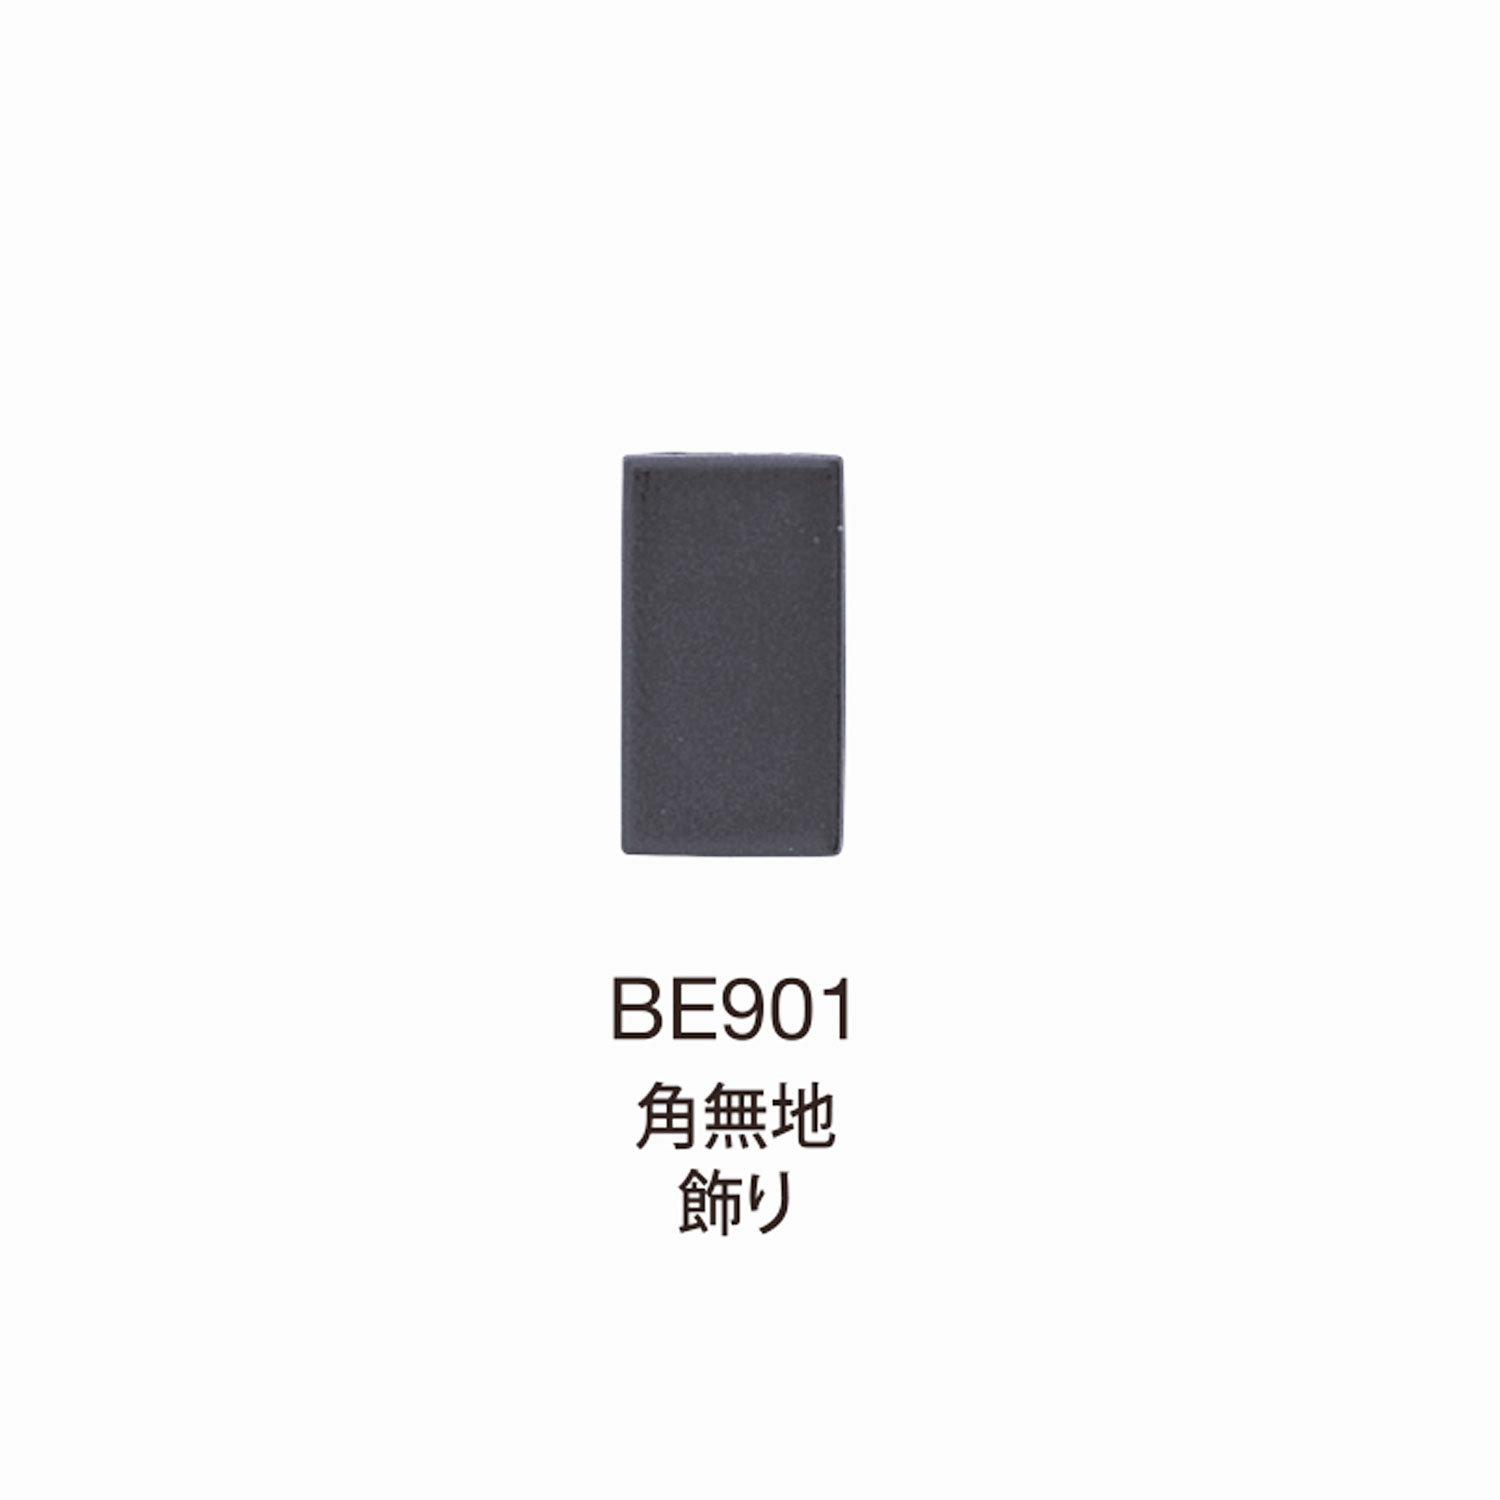 BE901 BEREX α 탑 하드웨어 코너 무지[버클 고리, 링] 모리토(MORITO)